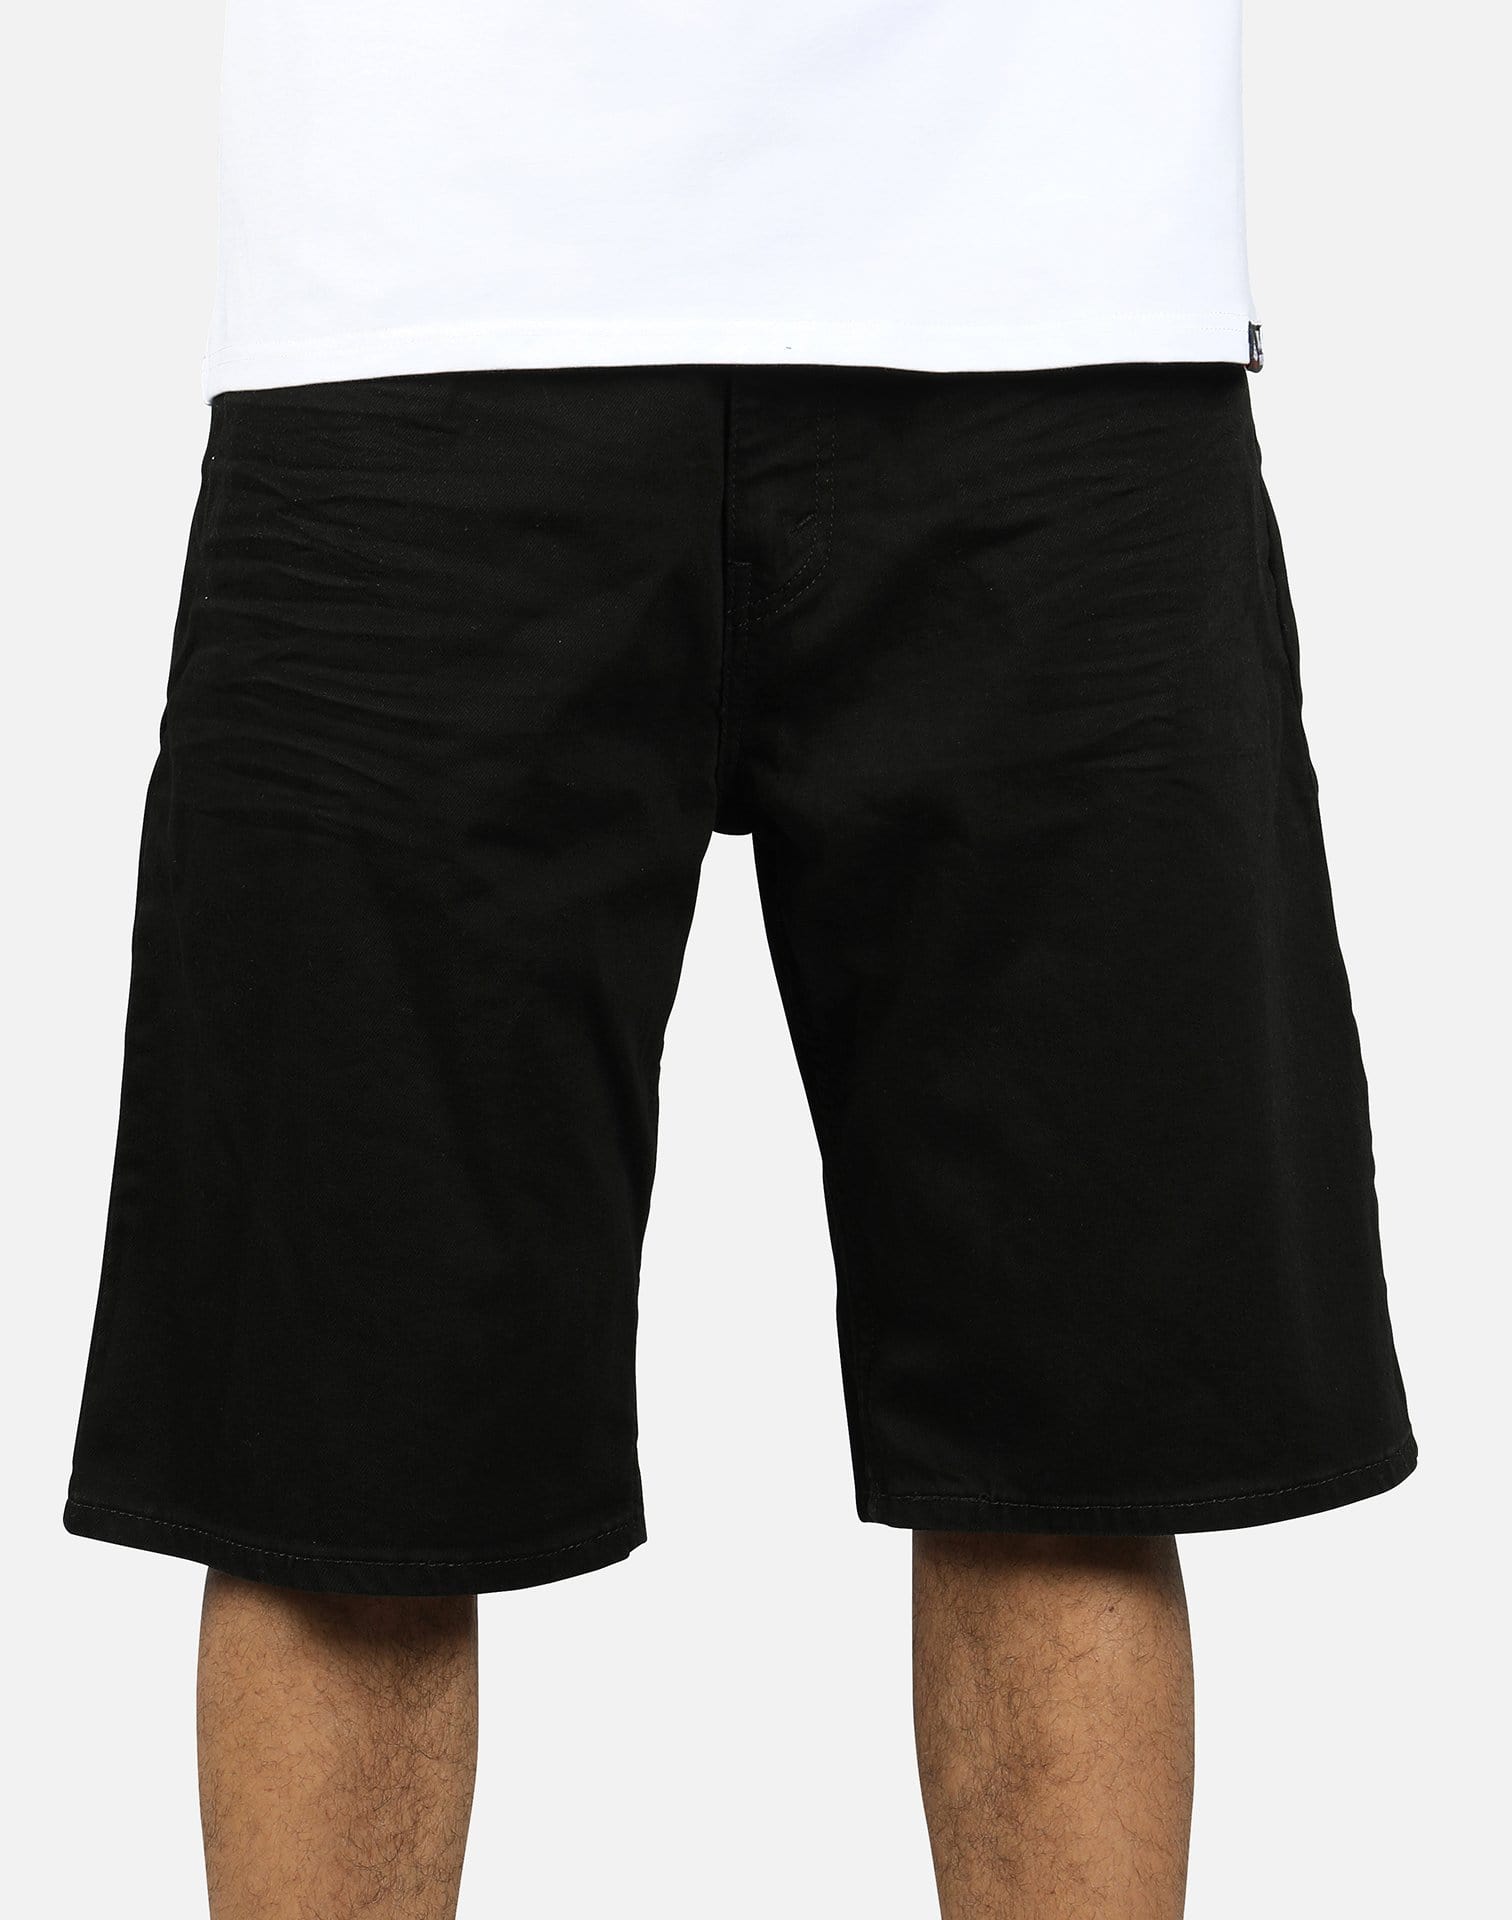 levis 569 shorts womens